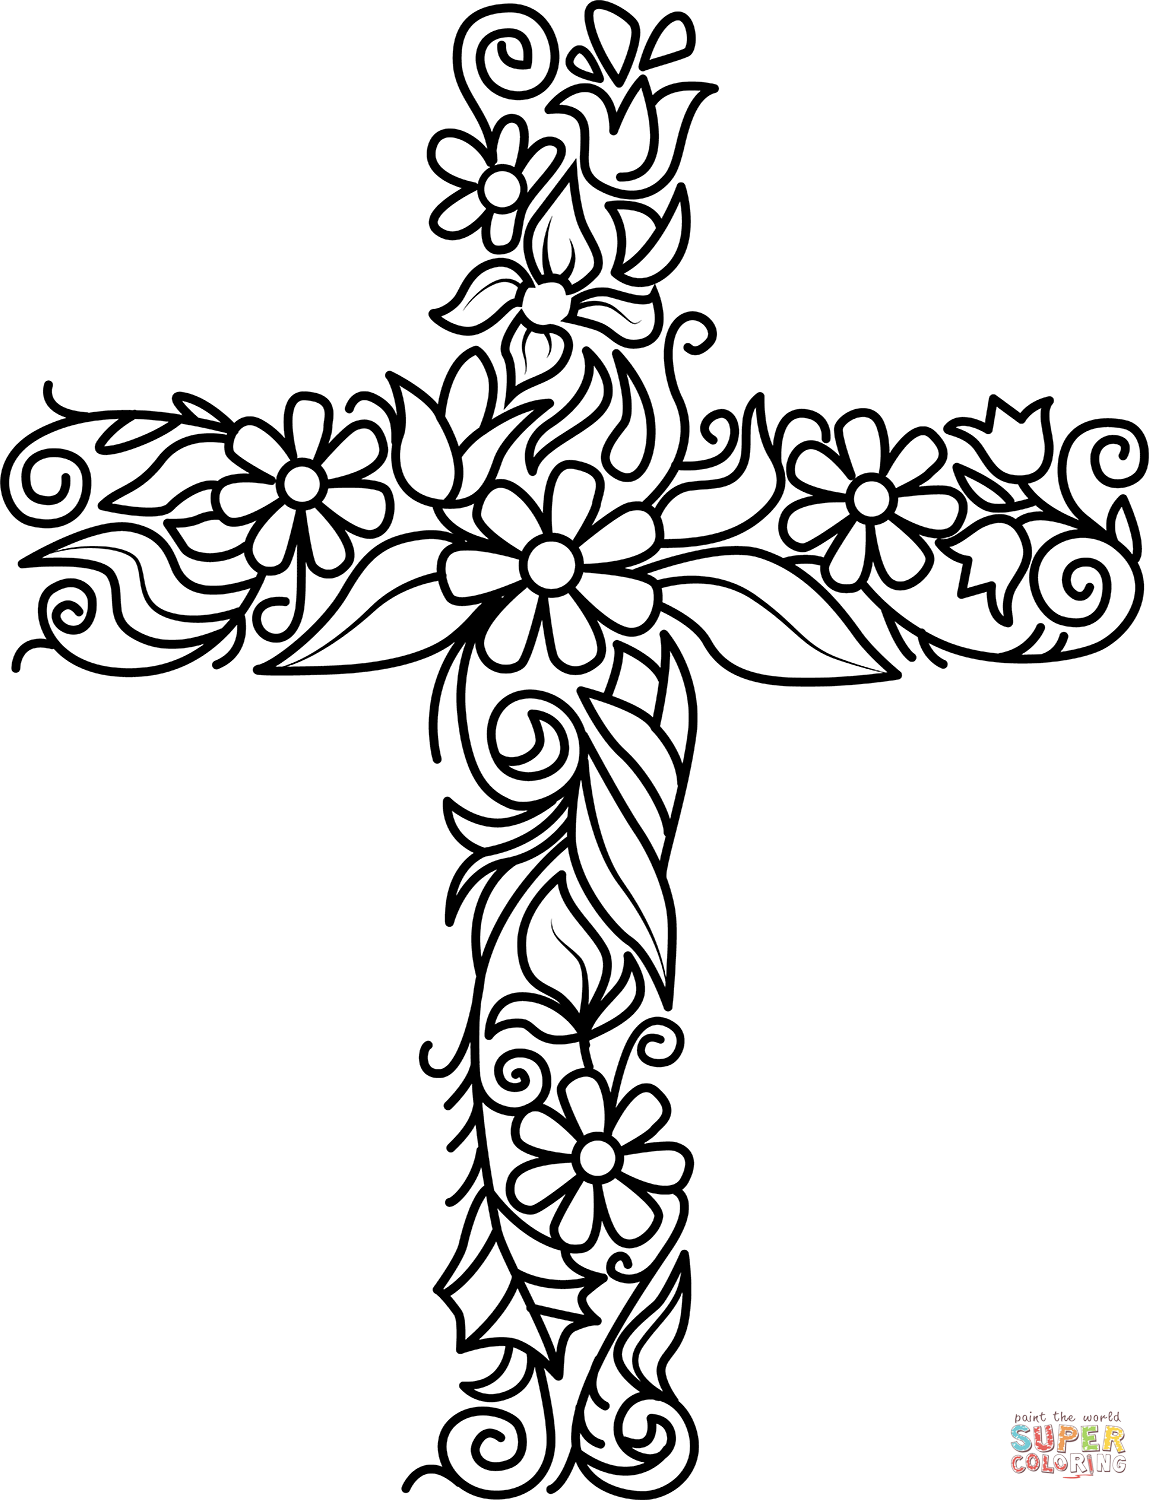 Dibujo de flor cruz de pascua para colorear | Dibujos para colorear  imprimir gratis